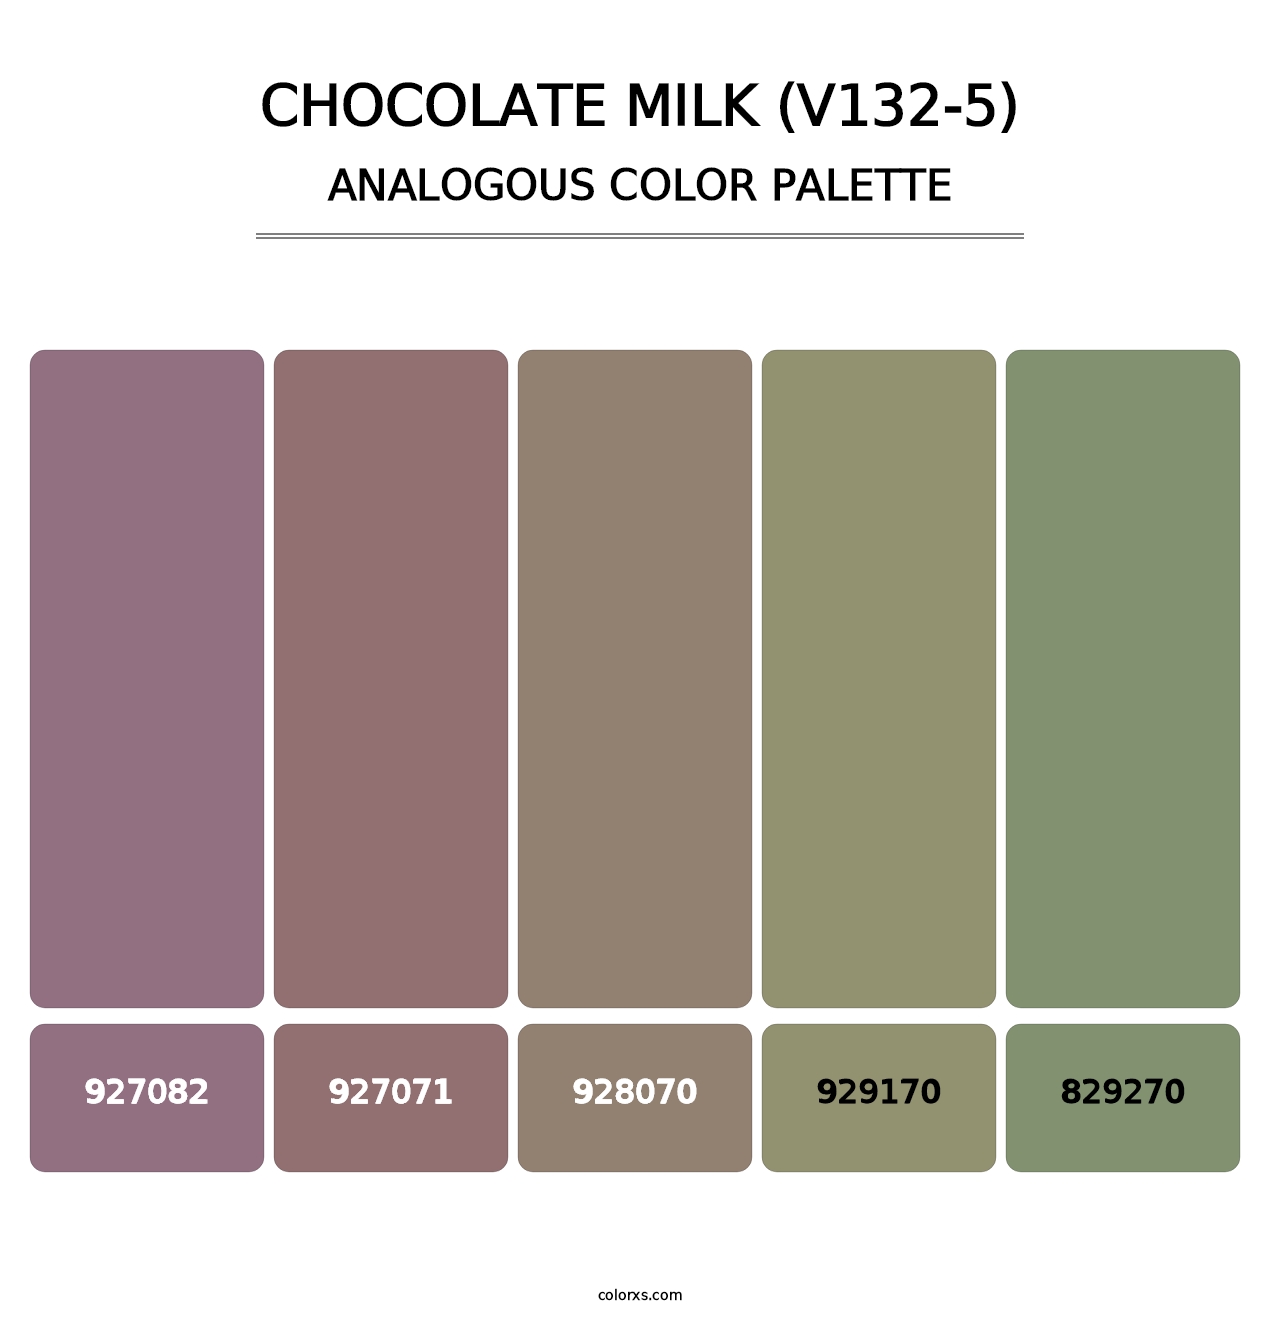 Chocolate Milk (V132-5) - Analogous Color Palette